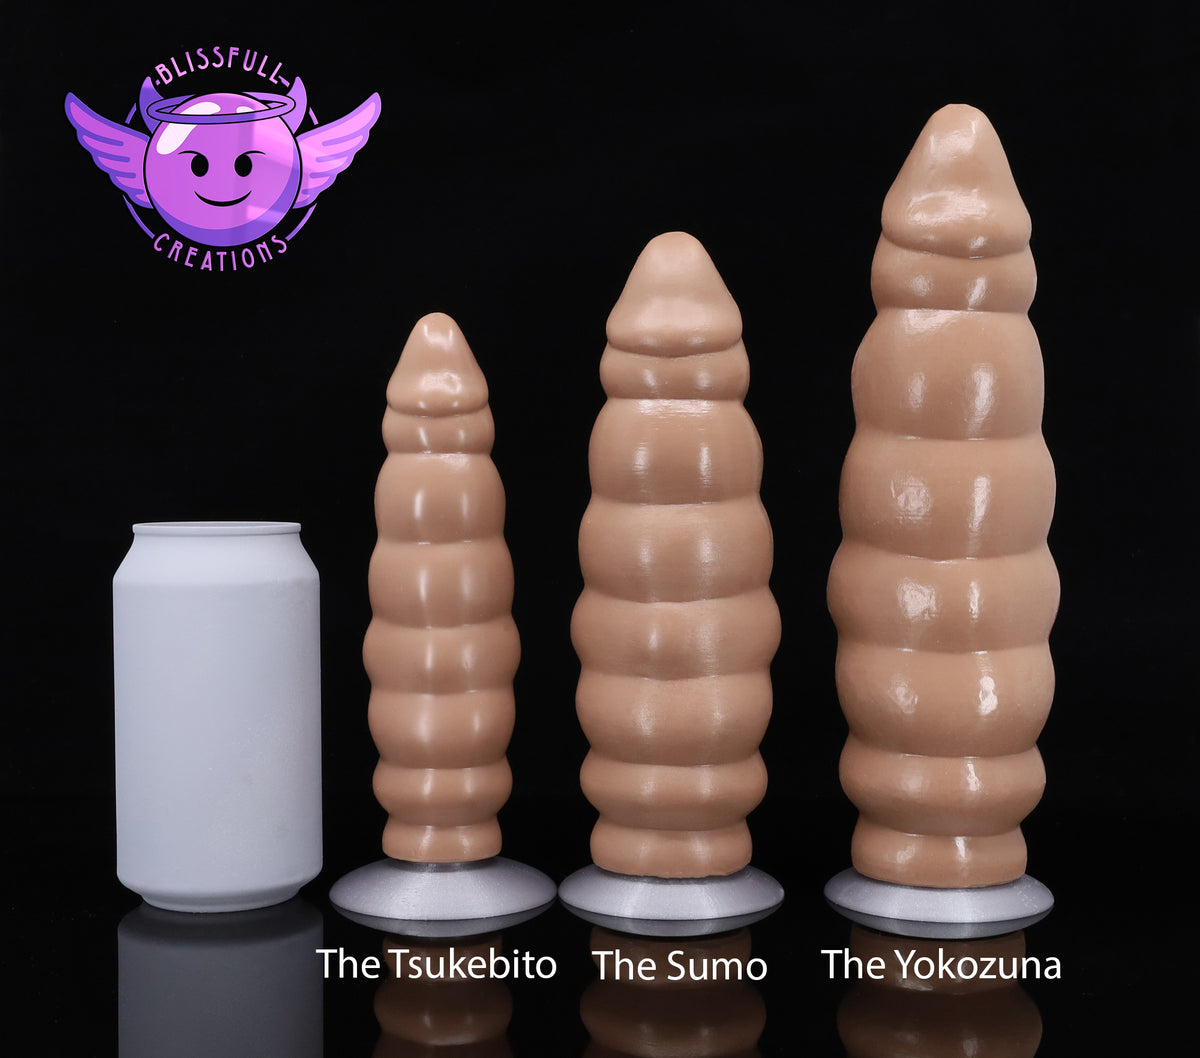 The Sumo